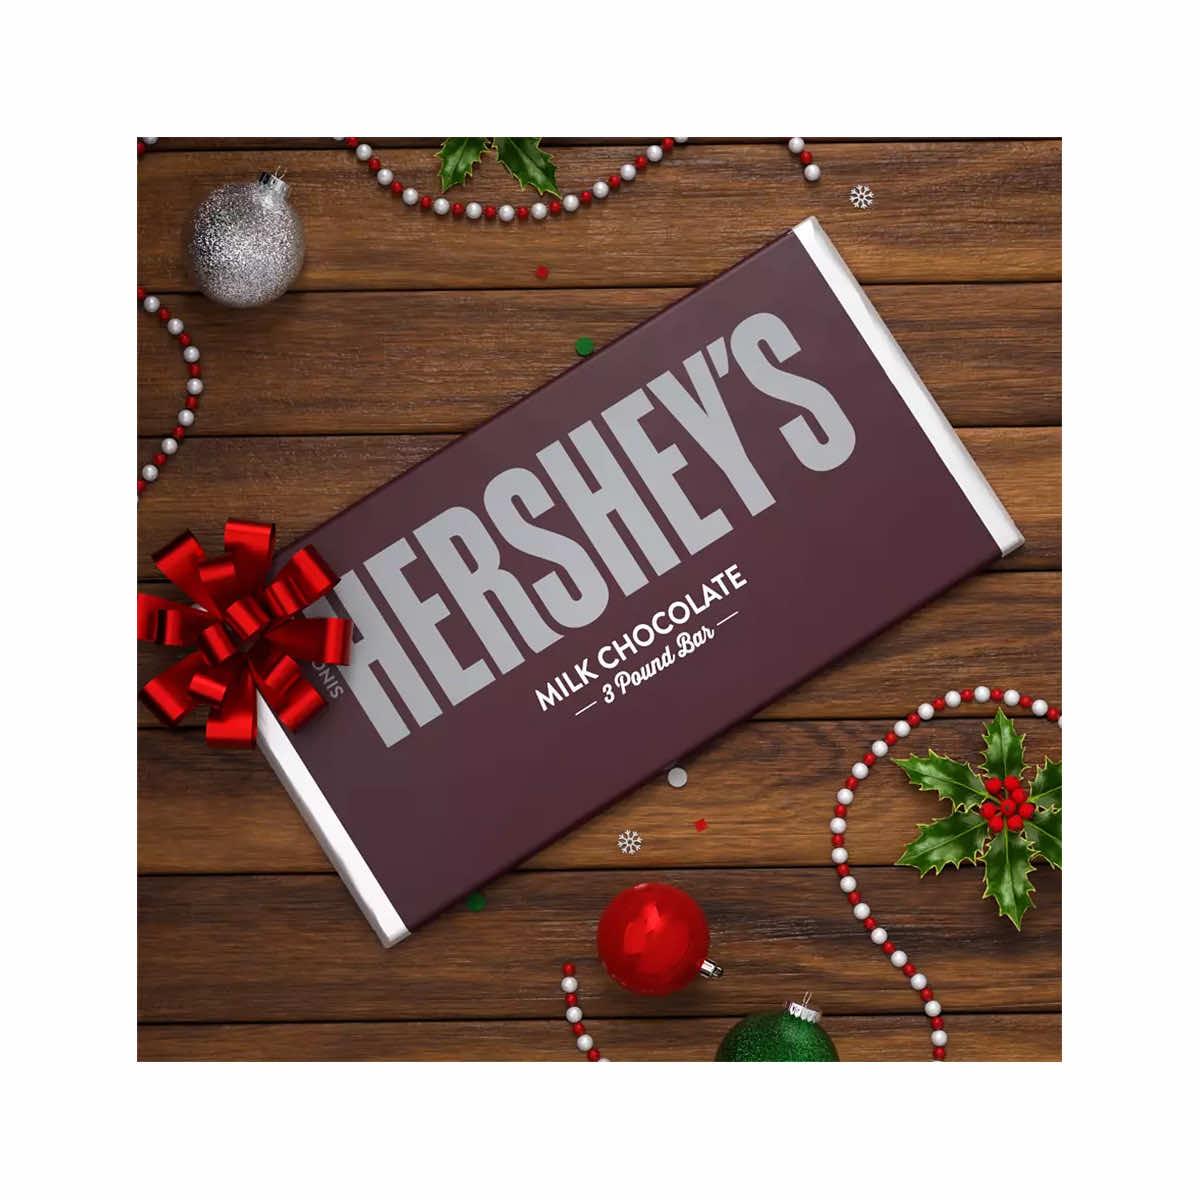 Hersheys Bar, Milk Chocolate - 3 lb